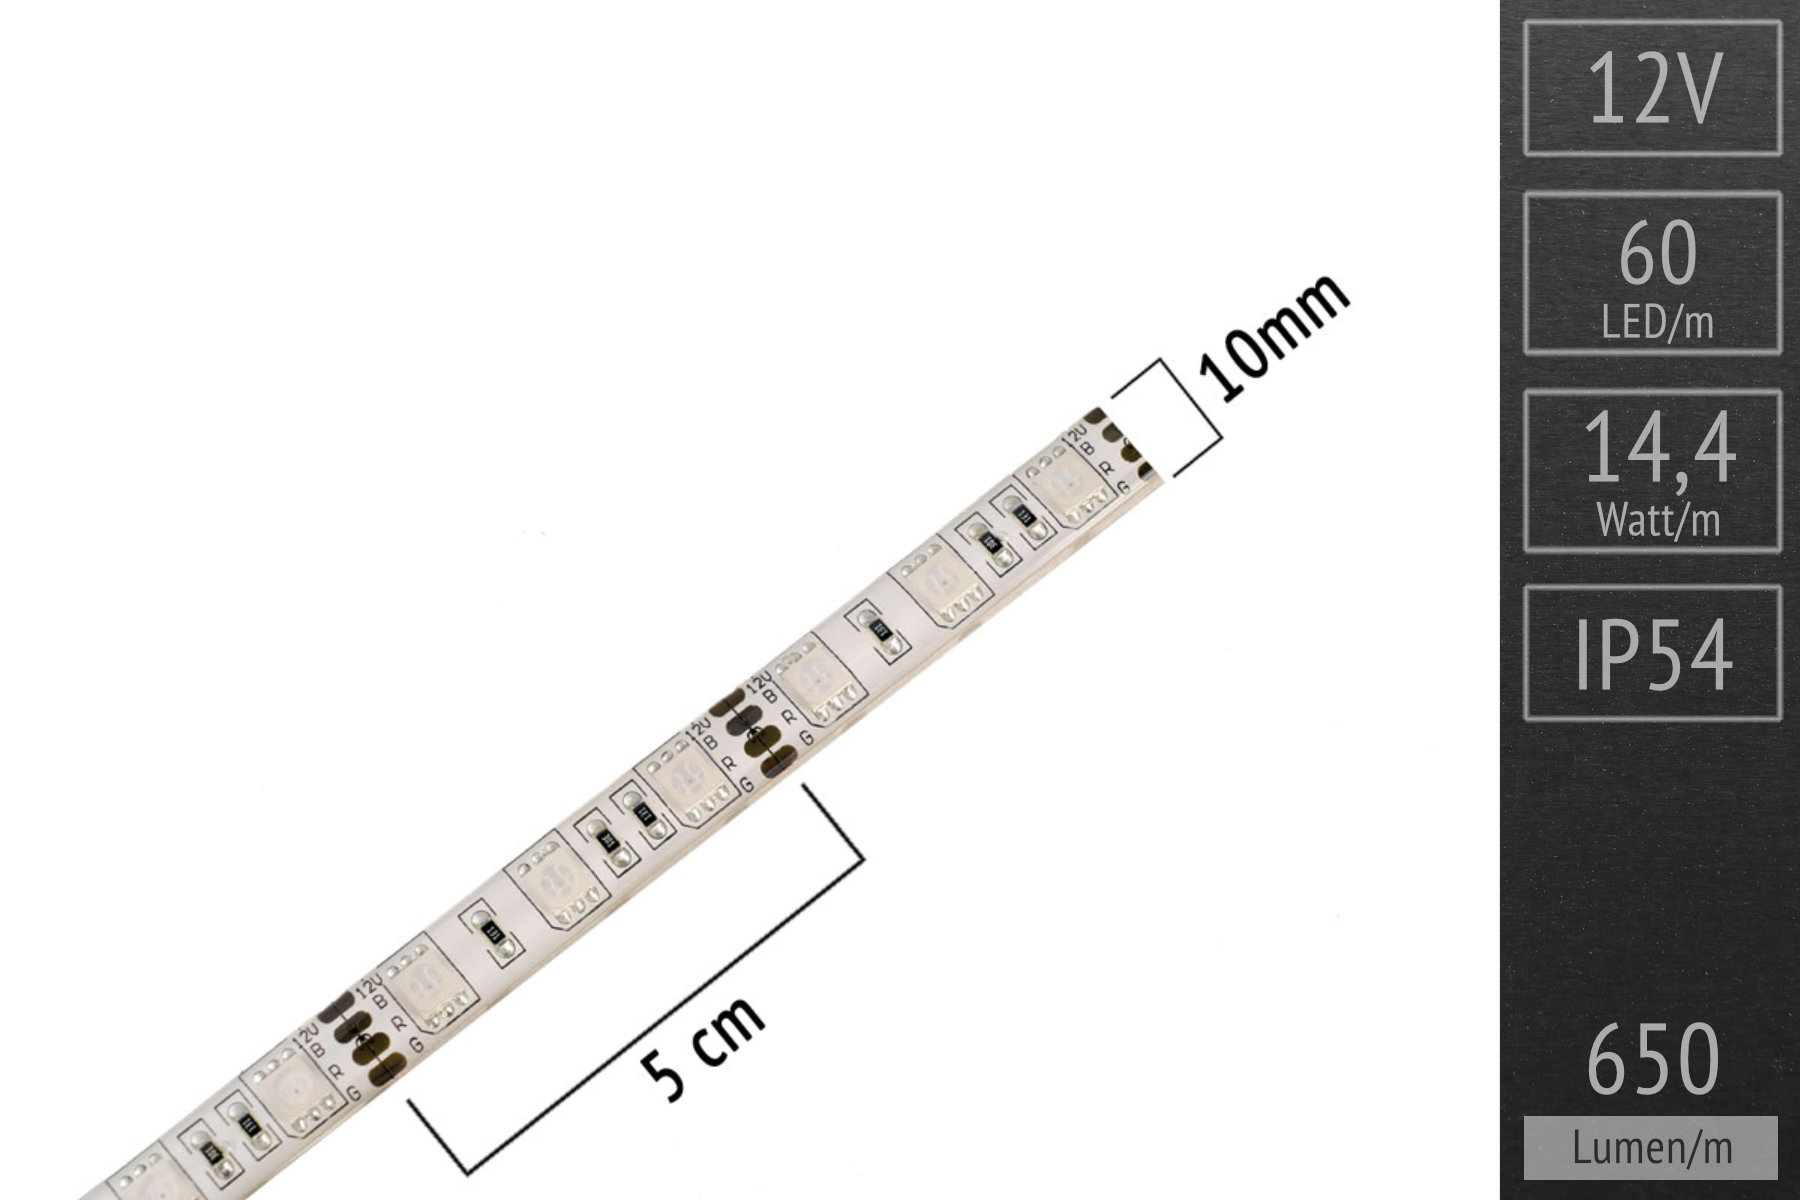 LED strip RGB 3in1 Standard: 60 LEDs/m - 12V - IP54 5m roll